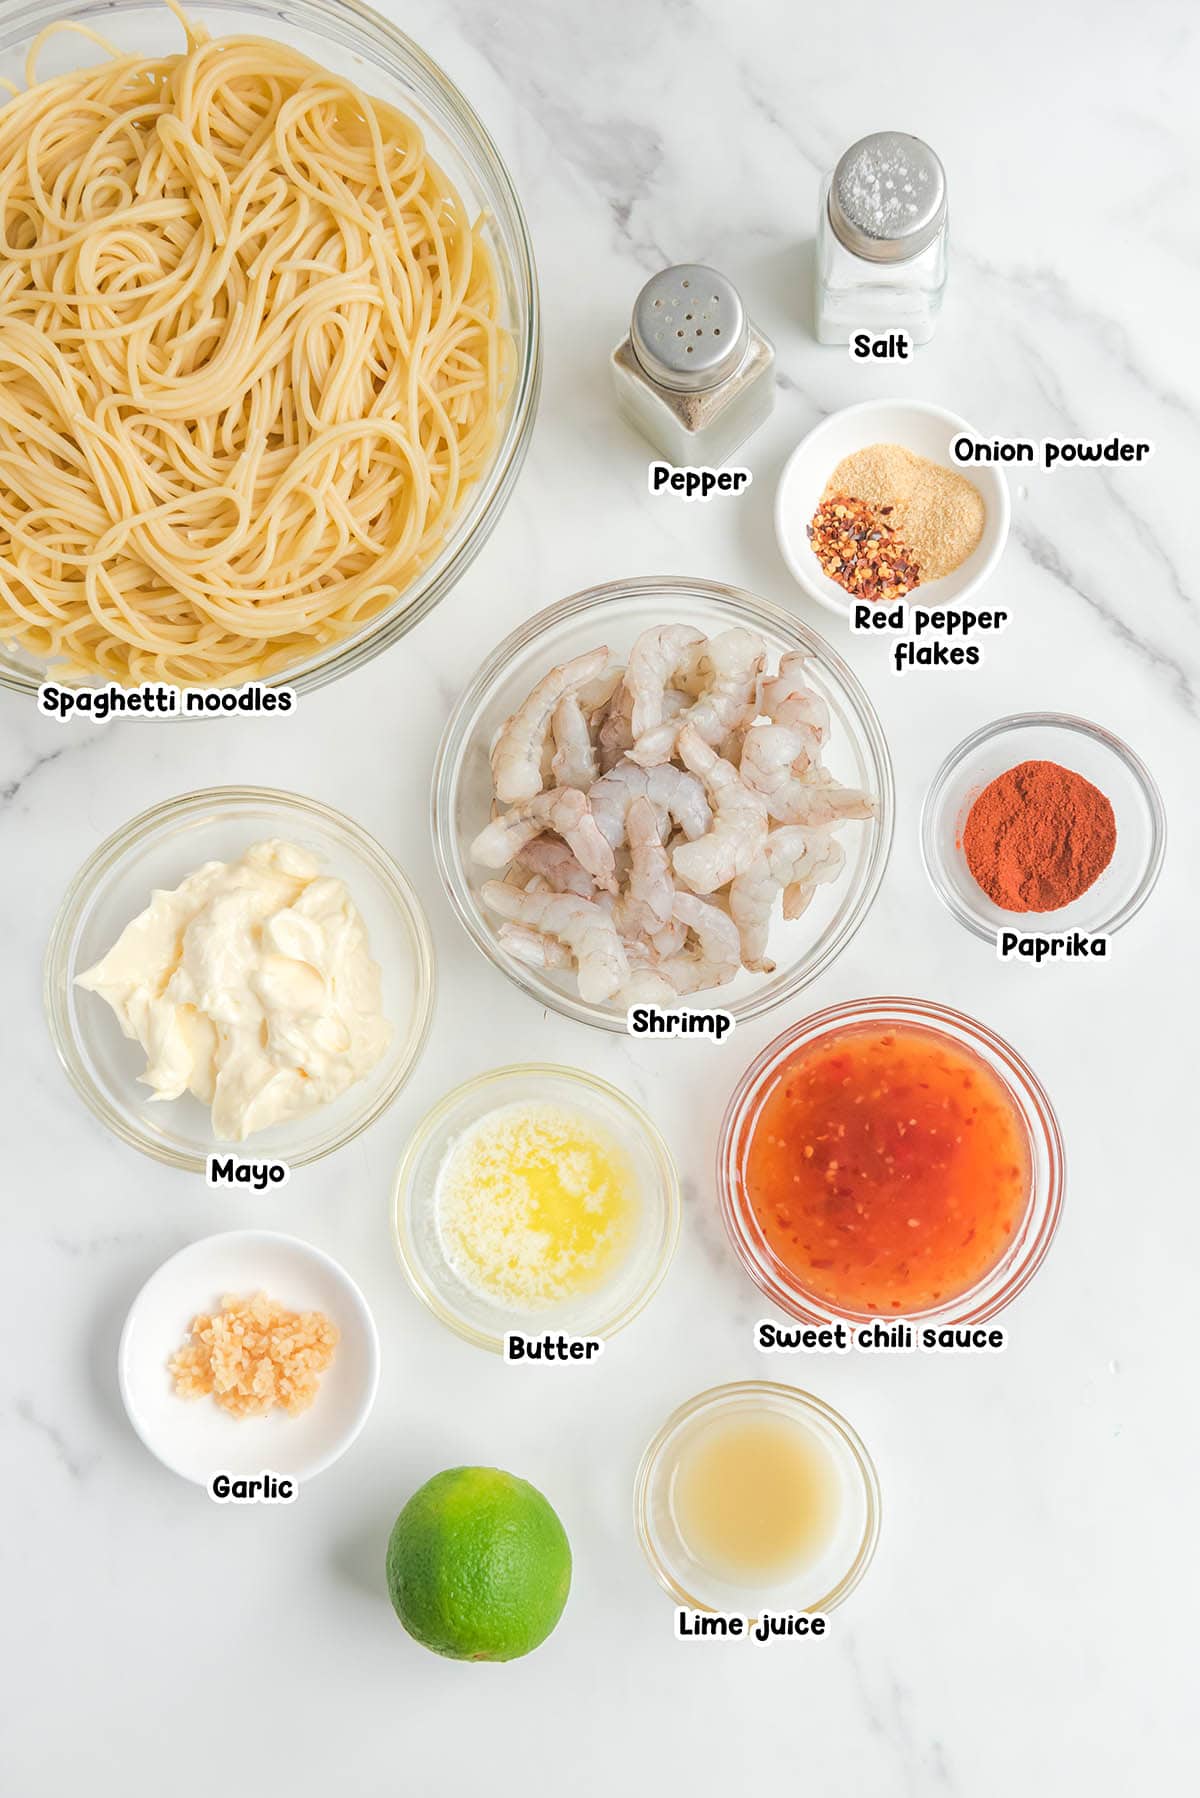 Bang Bang Shrimp Pasta ingredients - spaghetti noodles, red pepper flakes, mayo, shrimp, paprika, garlic, butter, sweet chili sauce, lime juice.